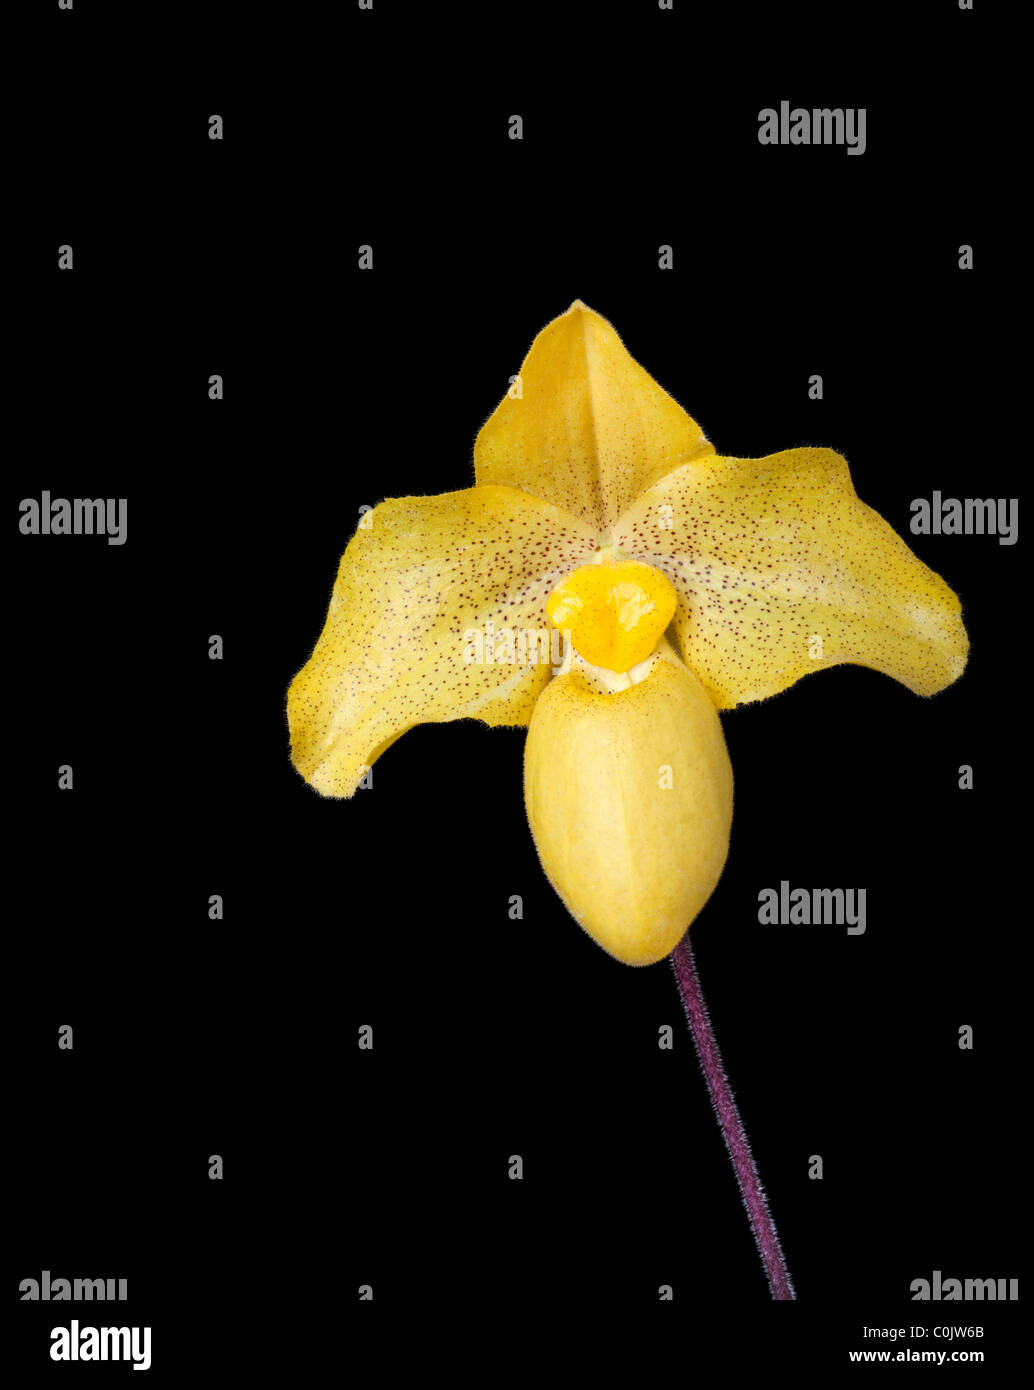 Slipper orchid against black background Stock Photo